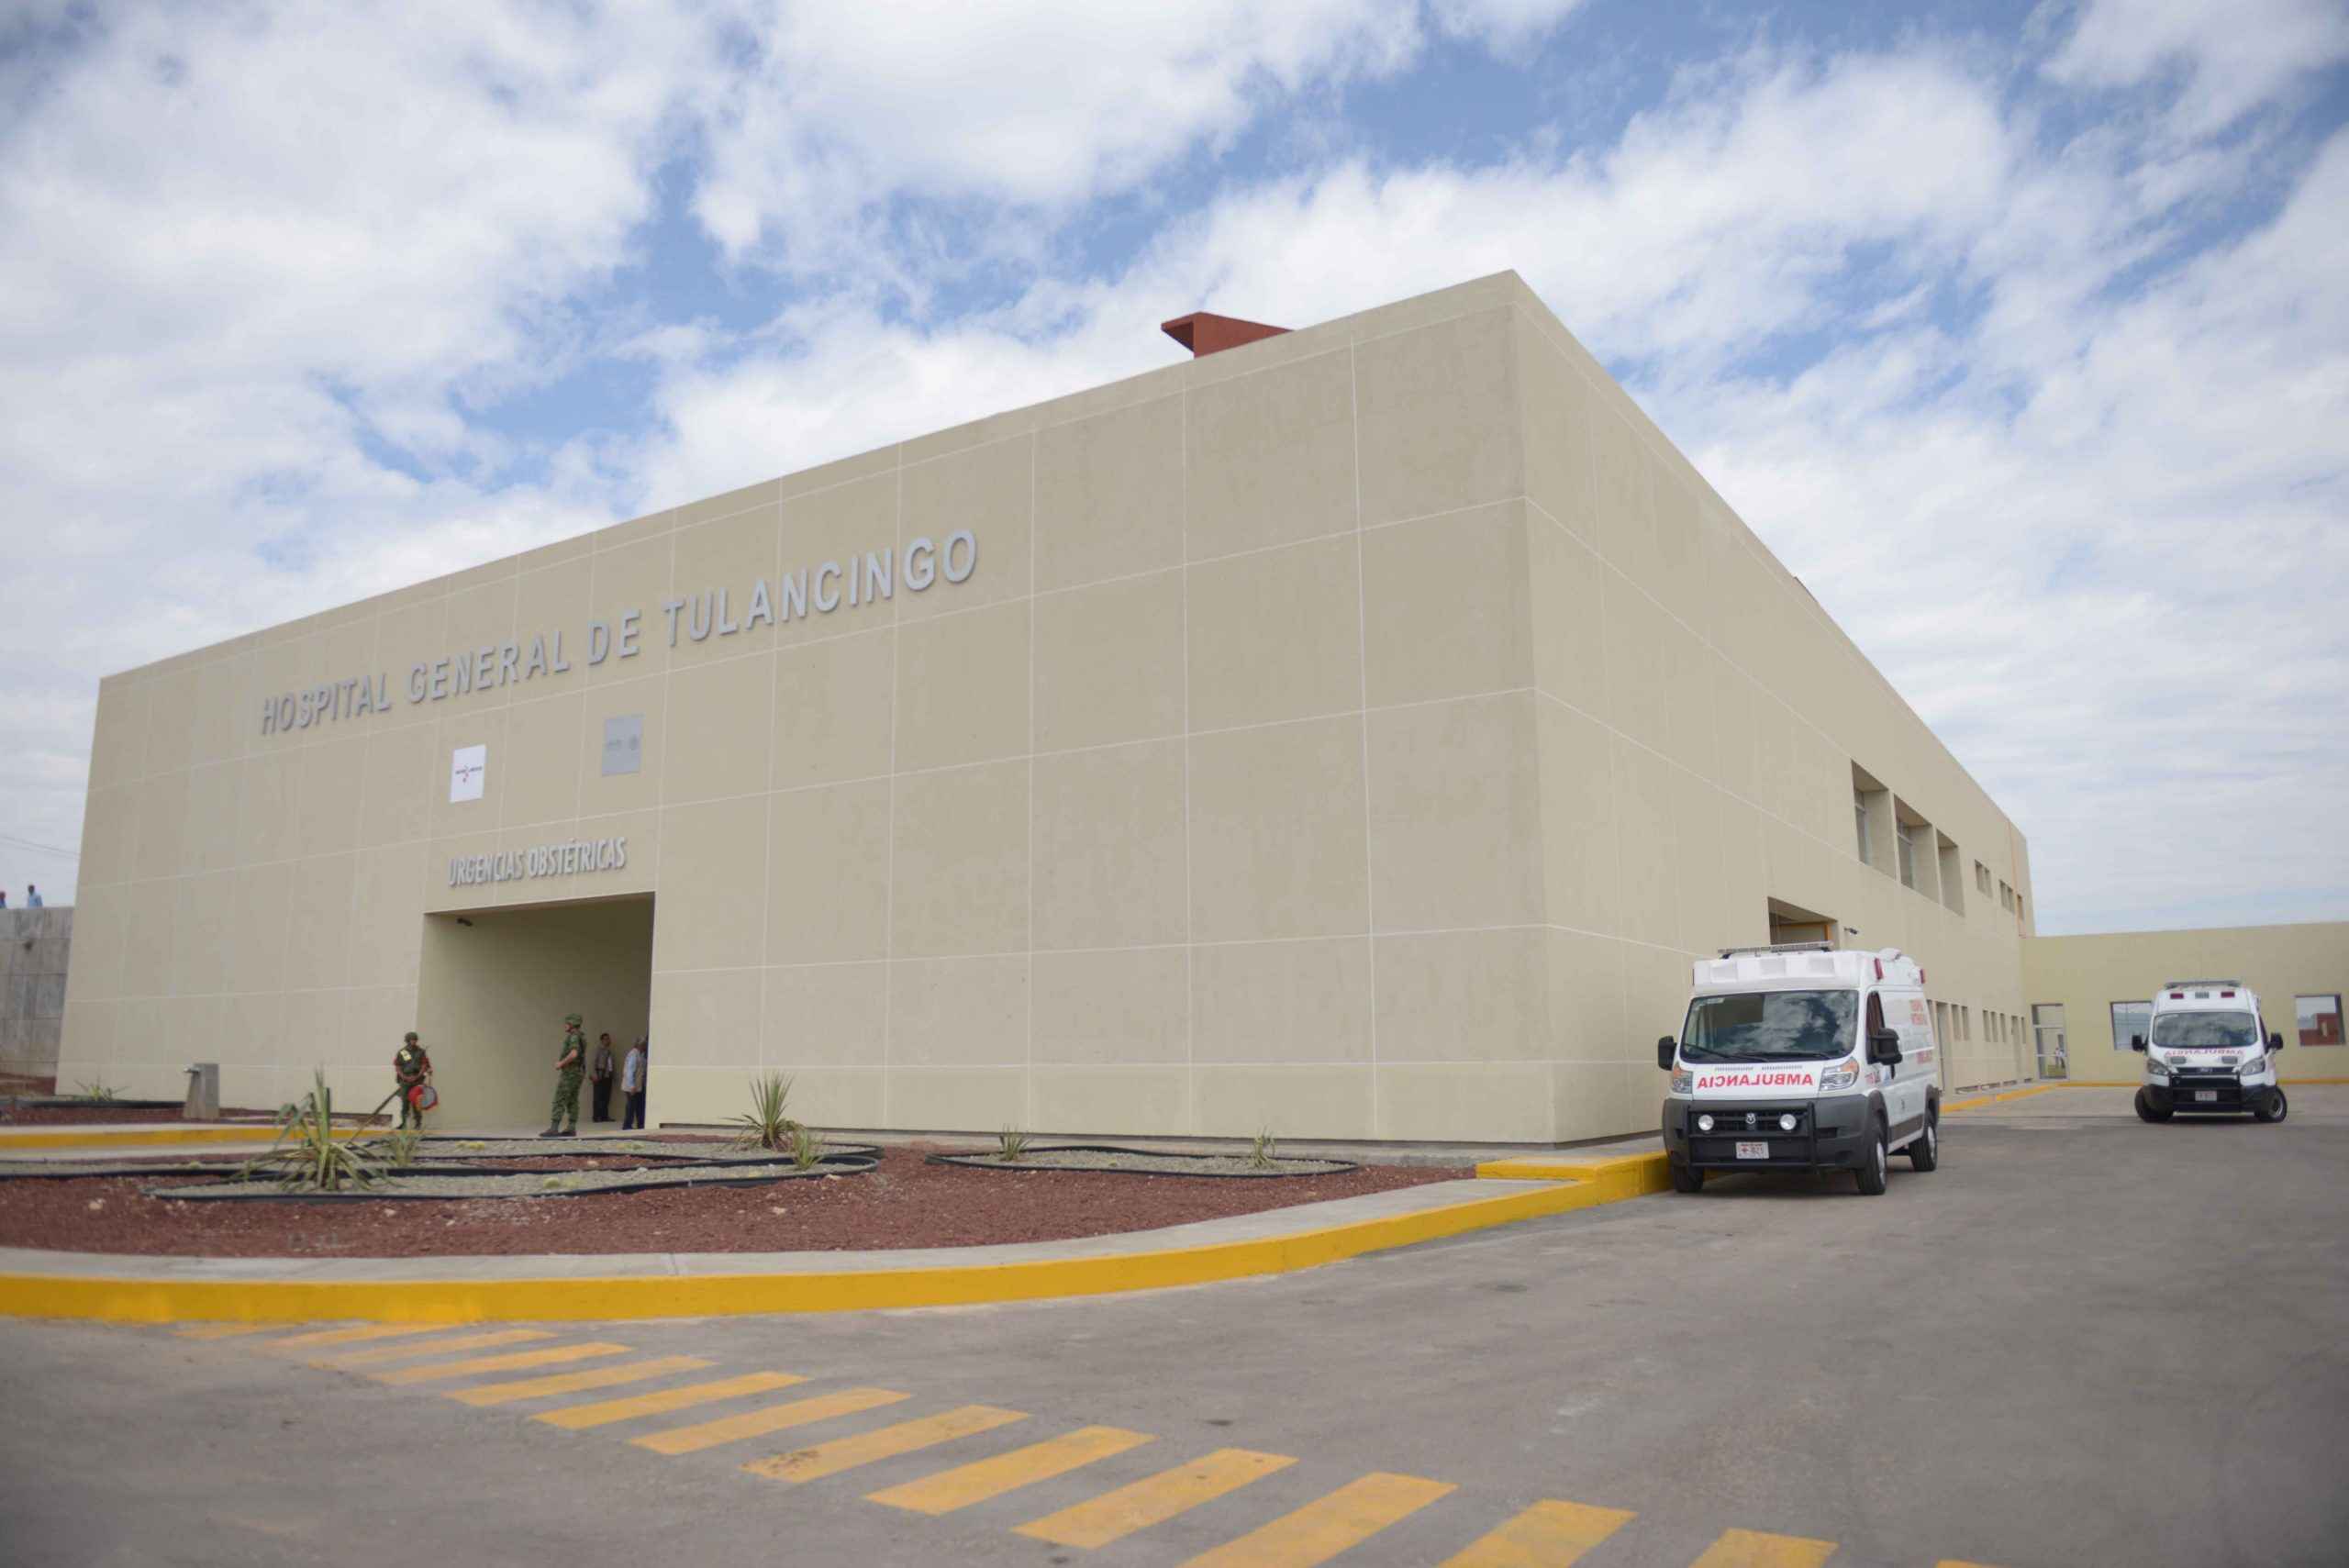 Modernizan Hospital General de Tulancingo - Hospital Tulancingo scaled